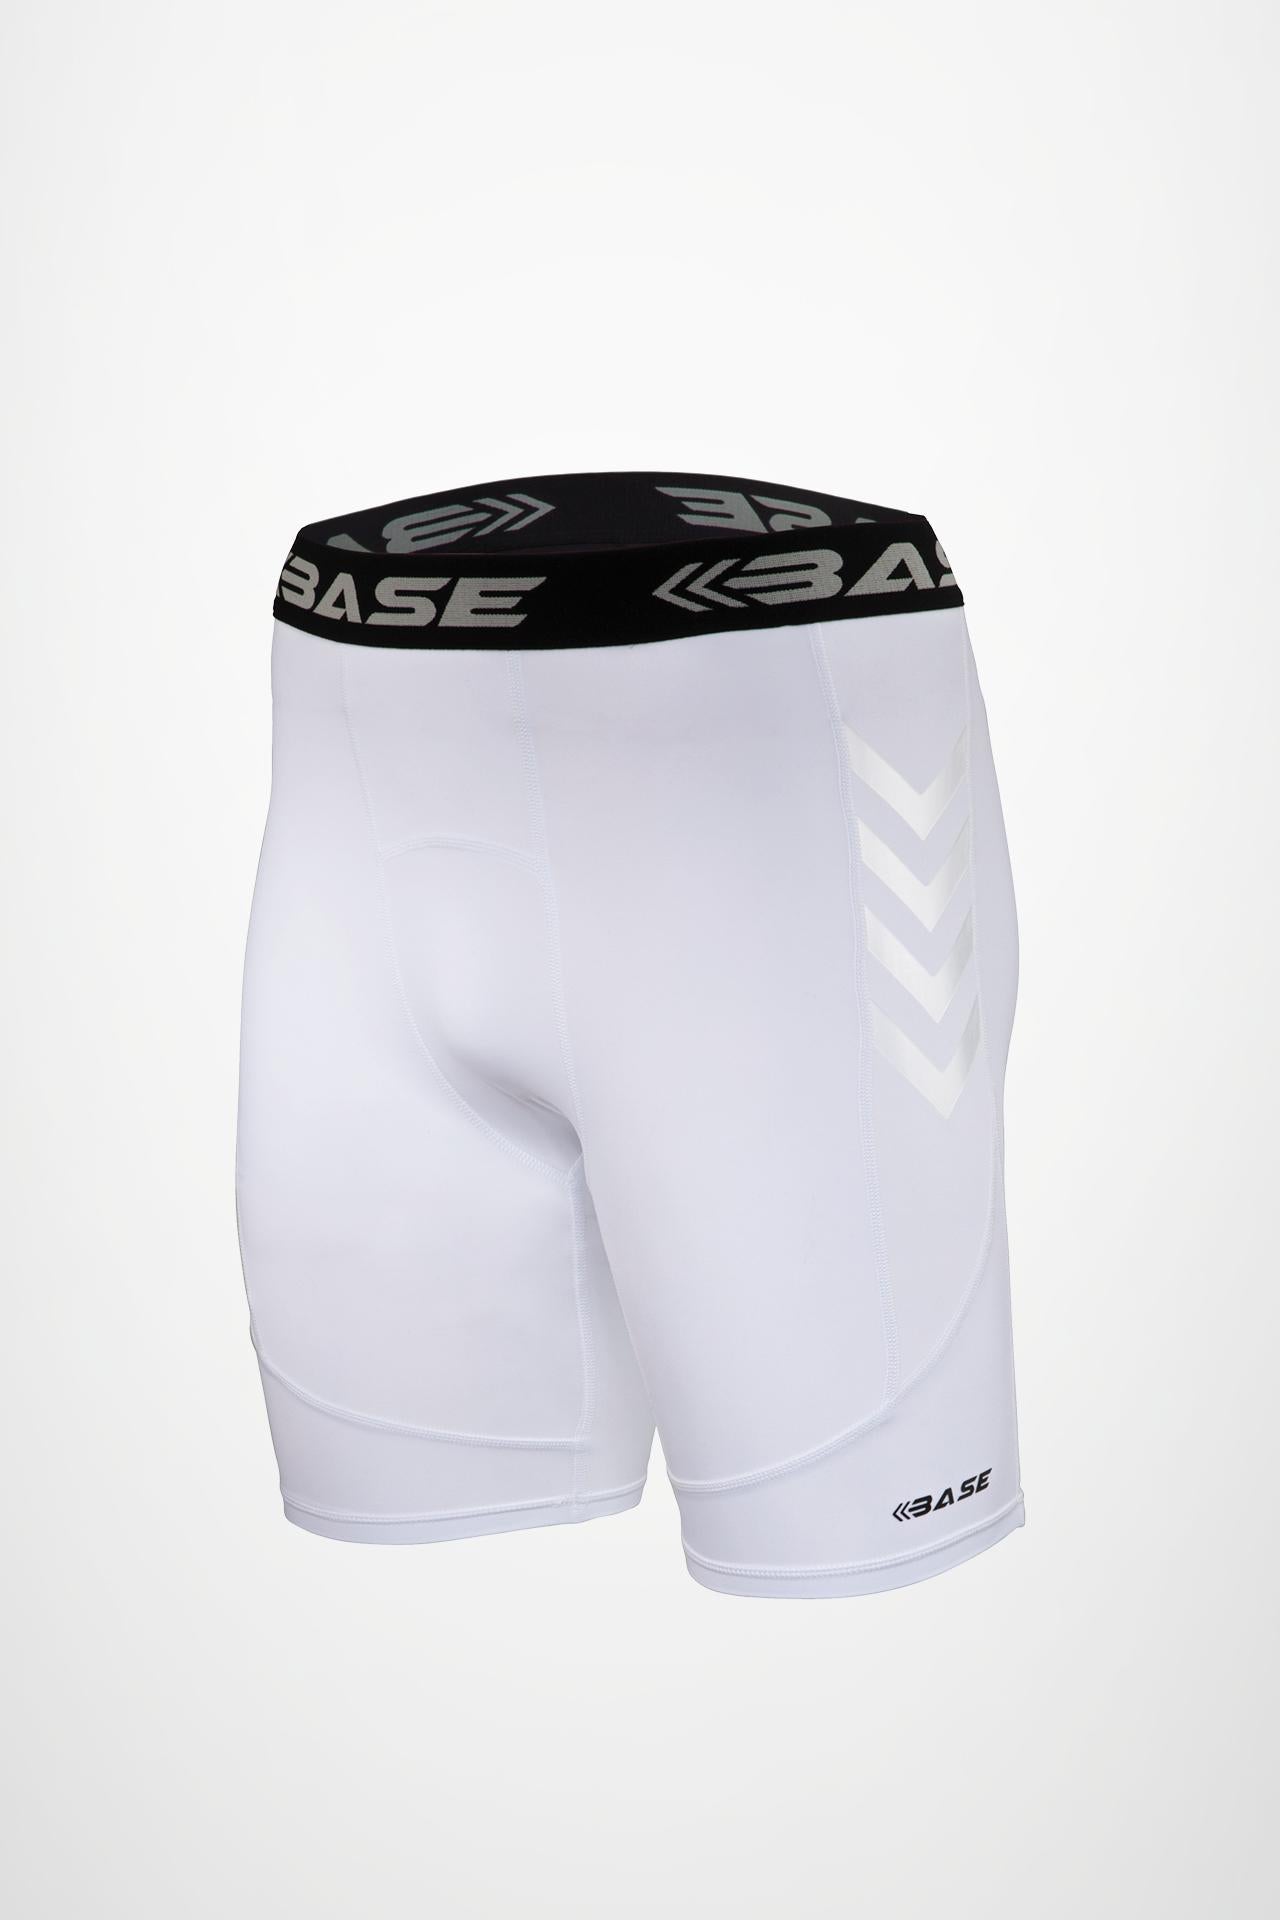 BASE Men's Compression Shorts - White - Adelaide 36ers